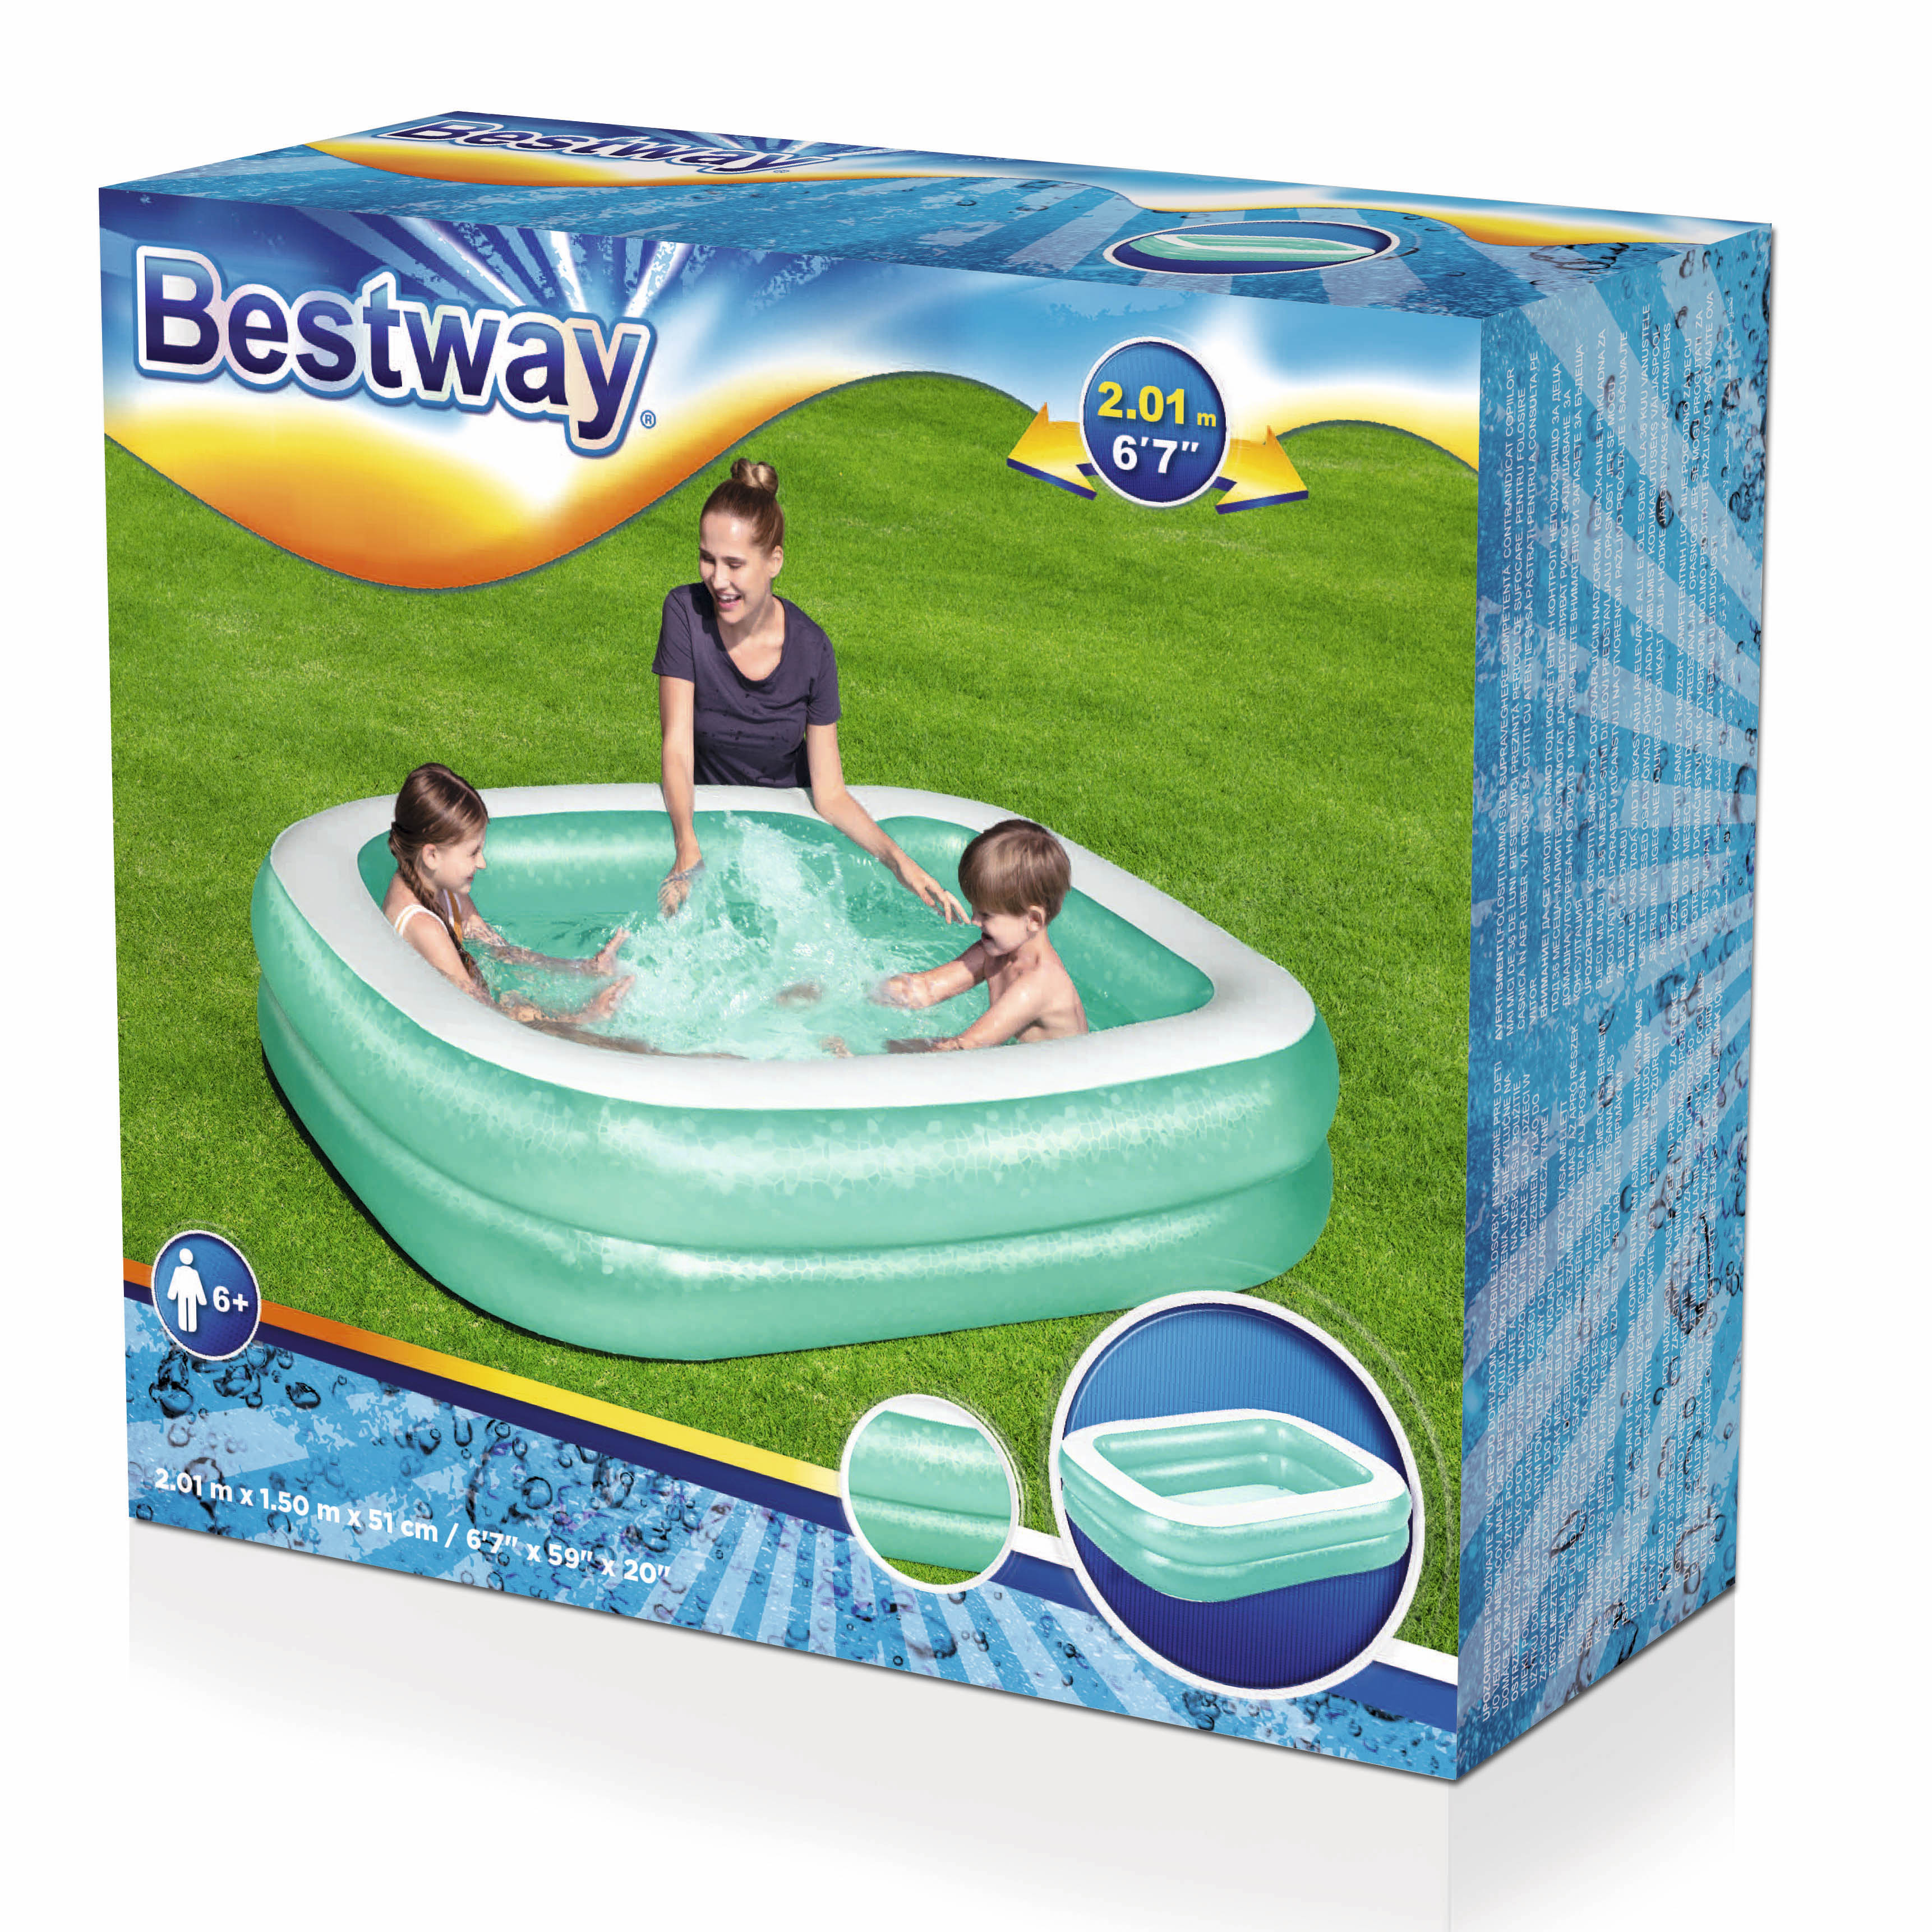 Bestway - Blue Rectangular Family Pool (6'7" x 59" x 20"/2.01m x 1.50m x 51cm)